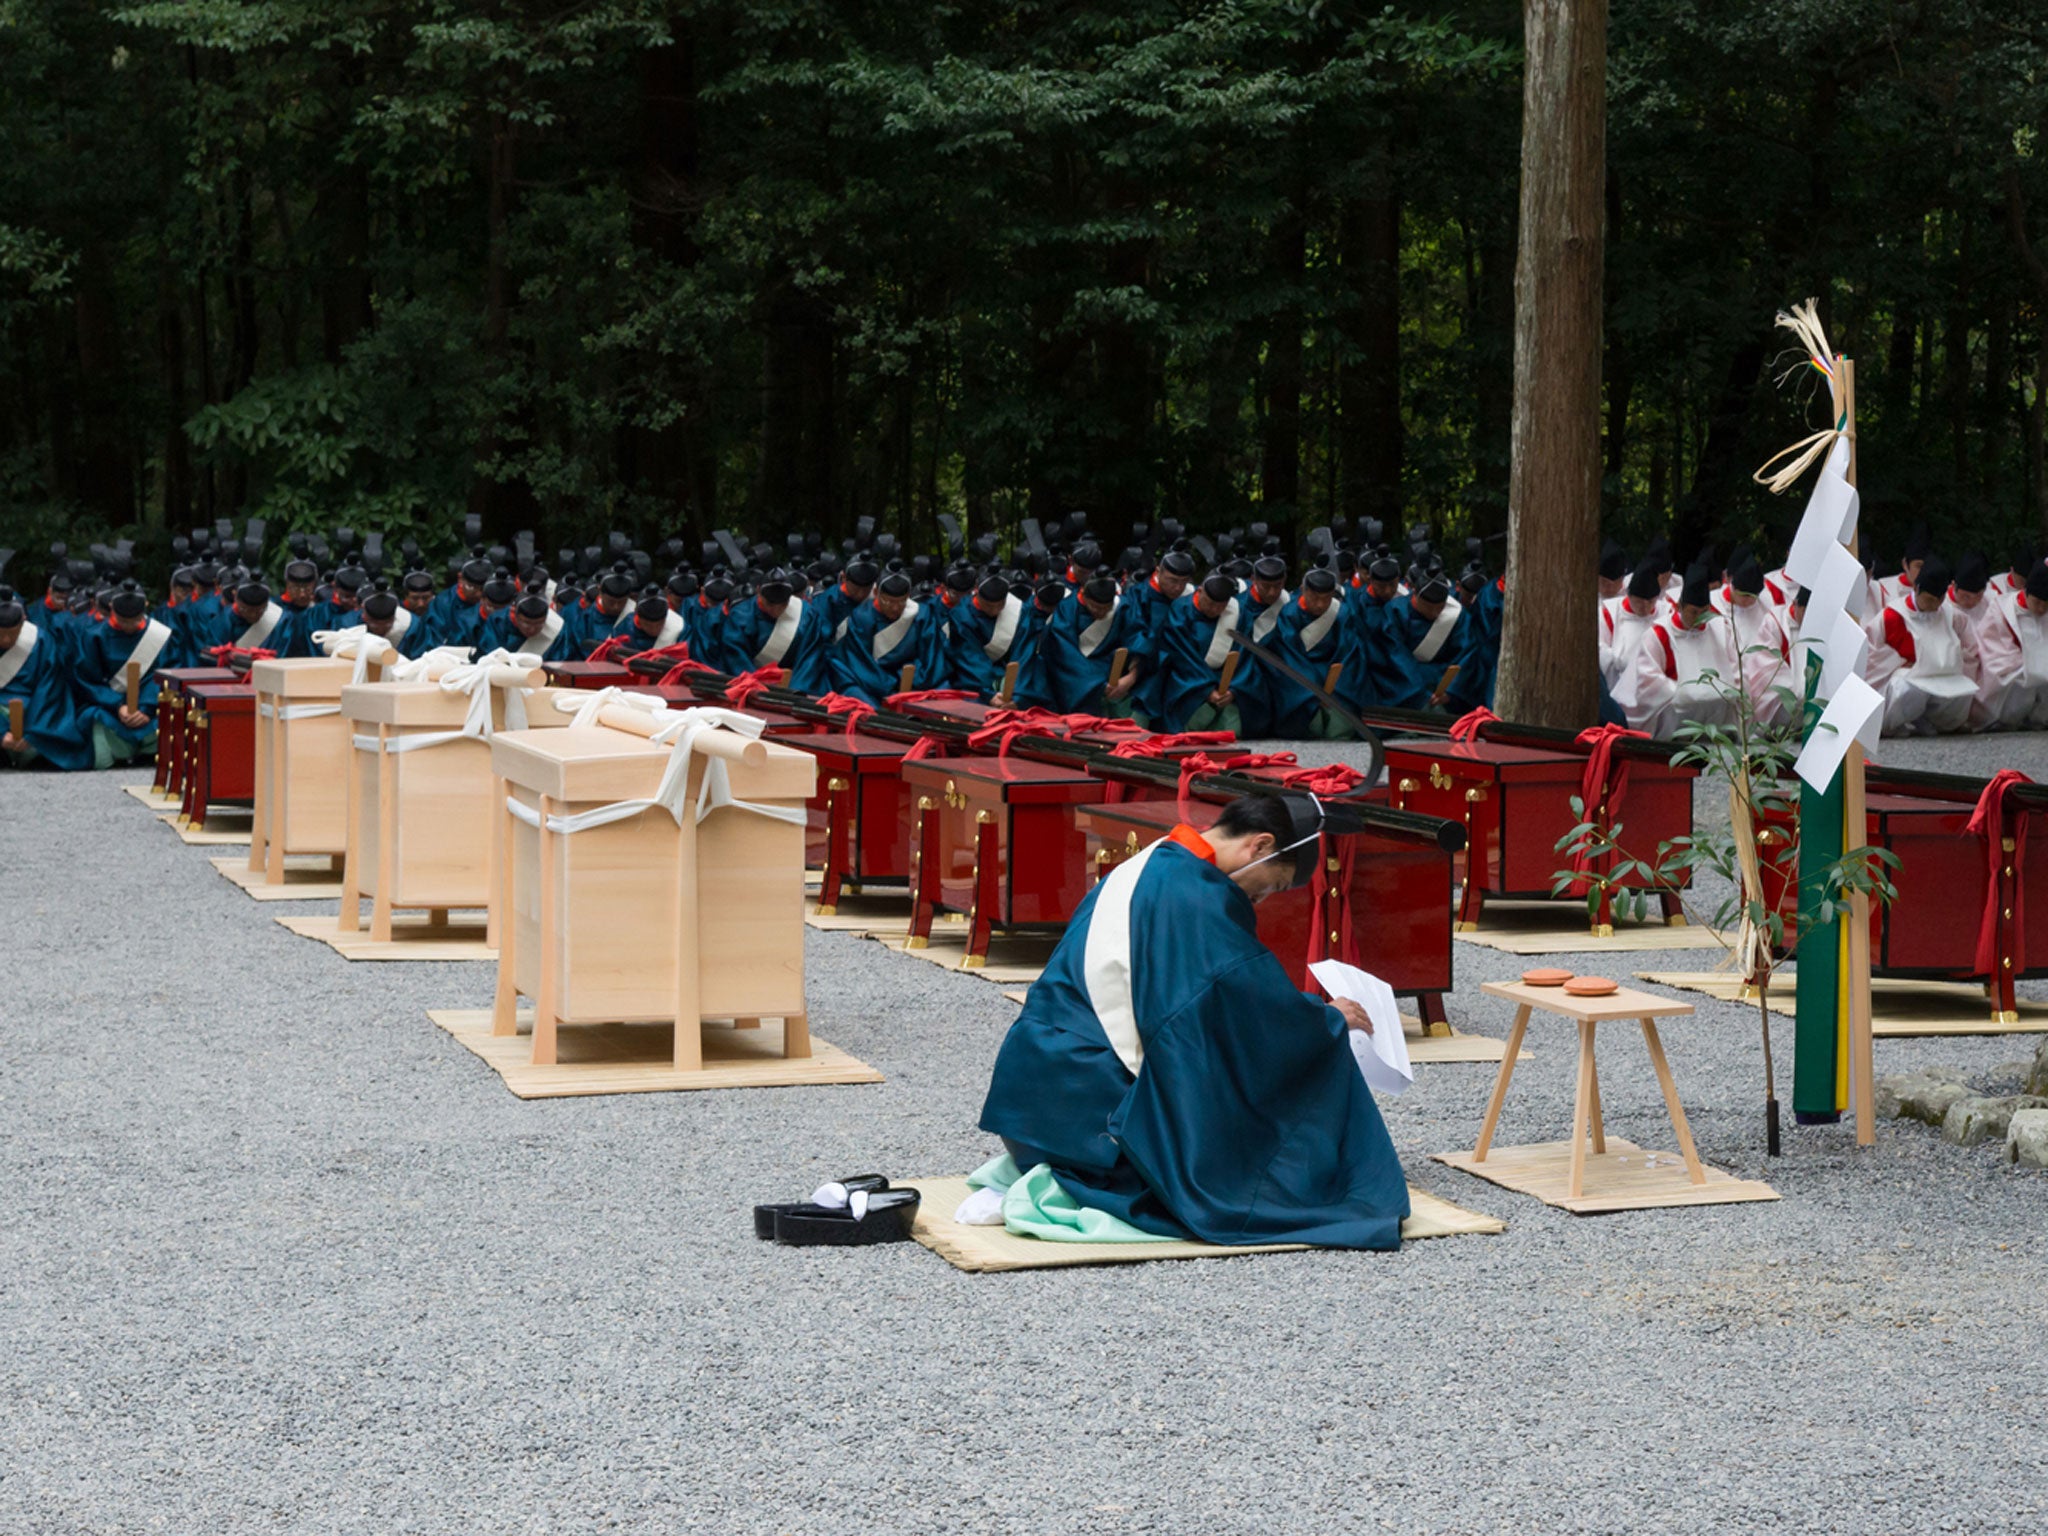 A Shinto ceremony of dedication